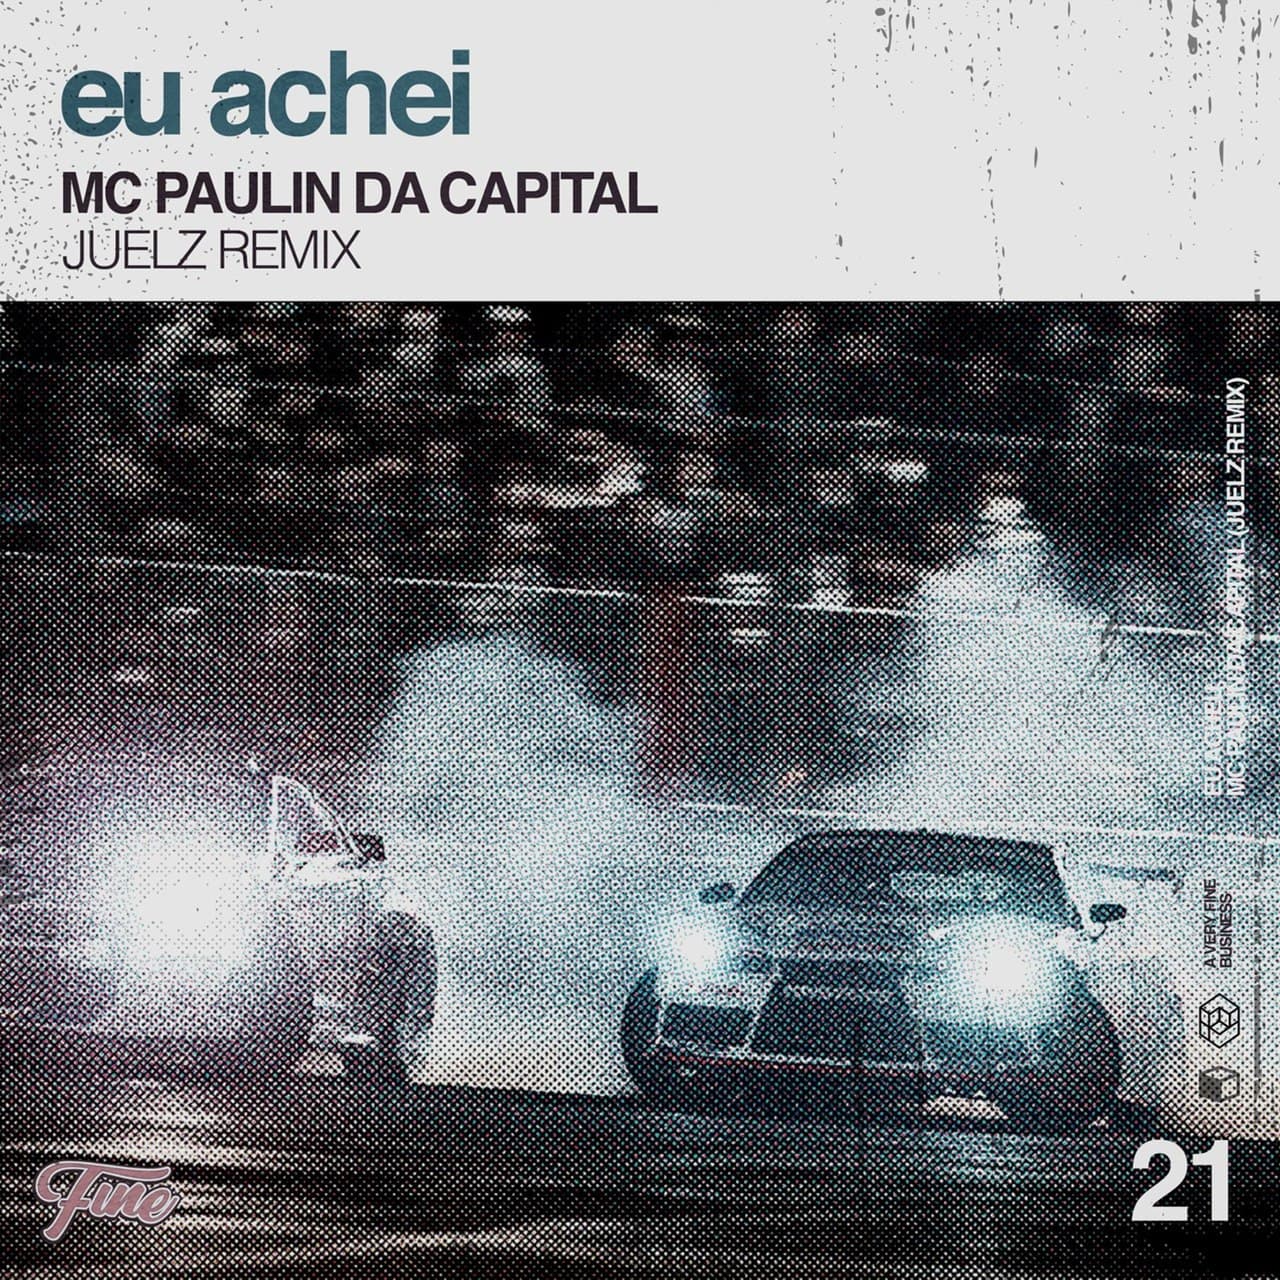 MC Paulin da Capital - Eu Achei (Juelz Remix)